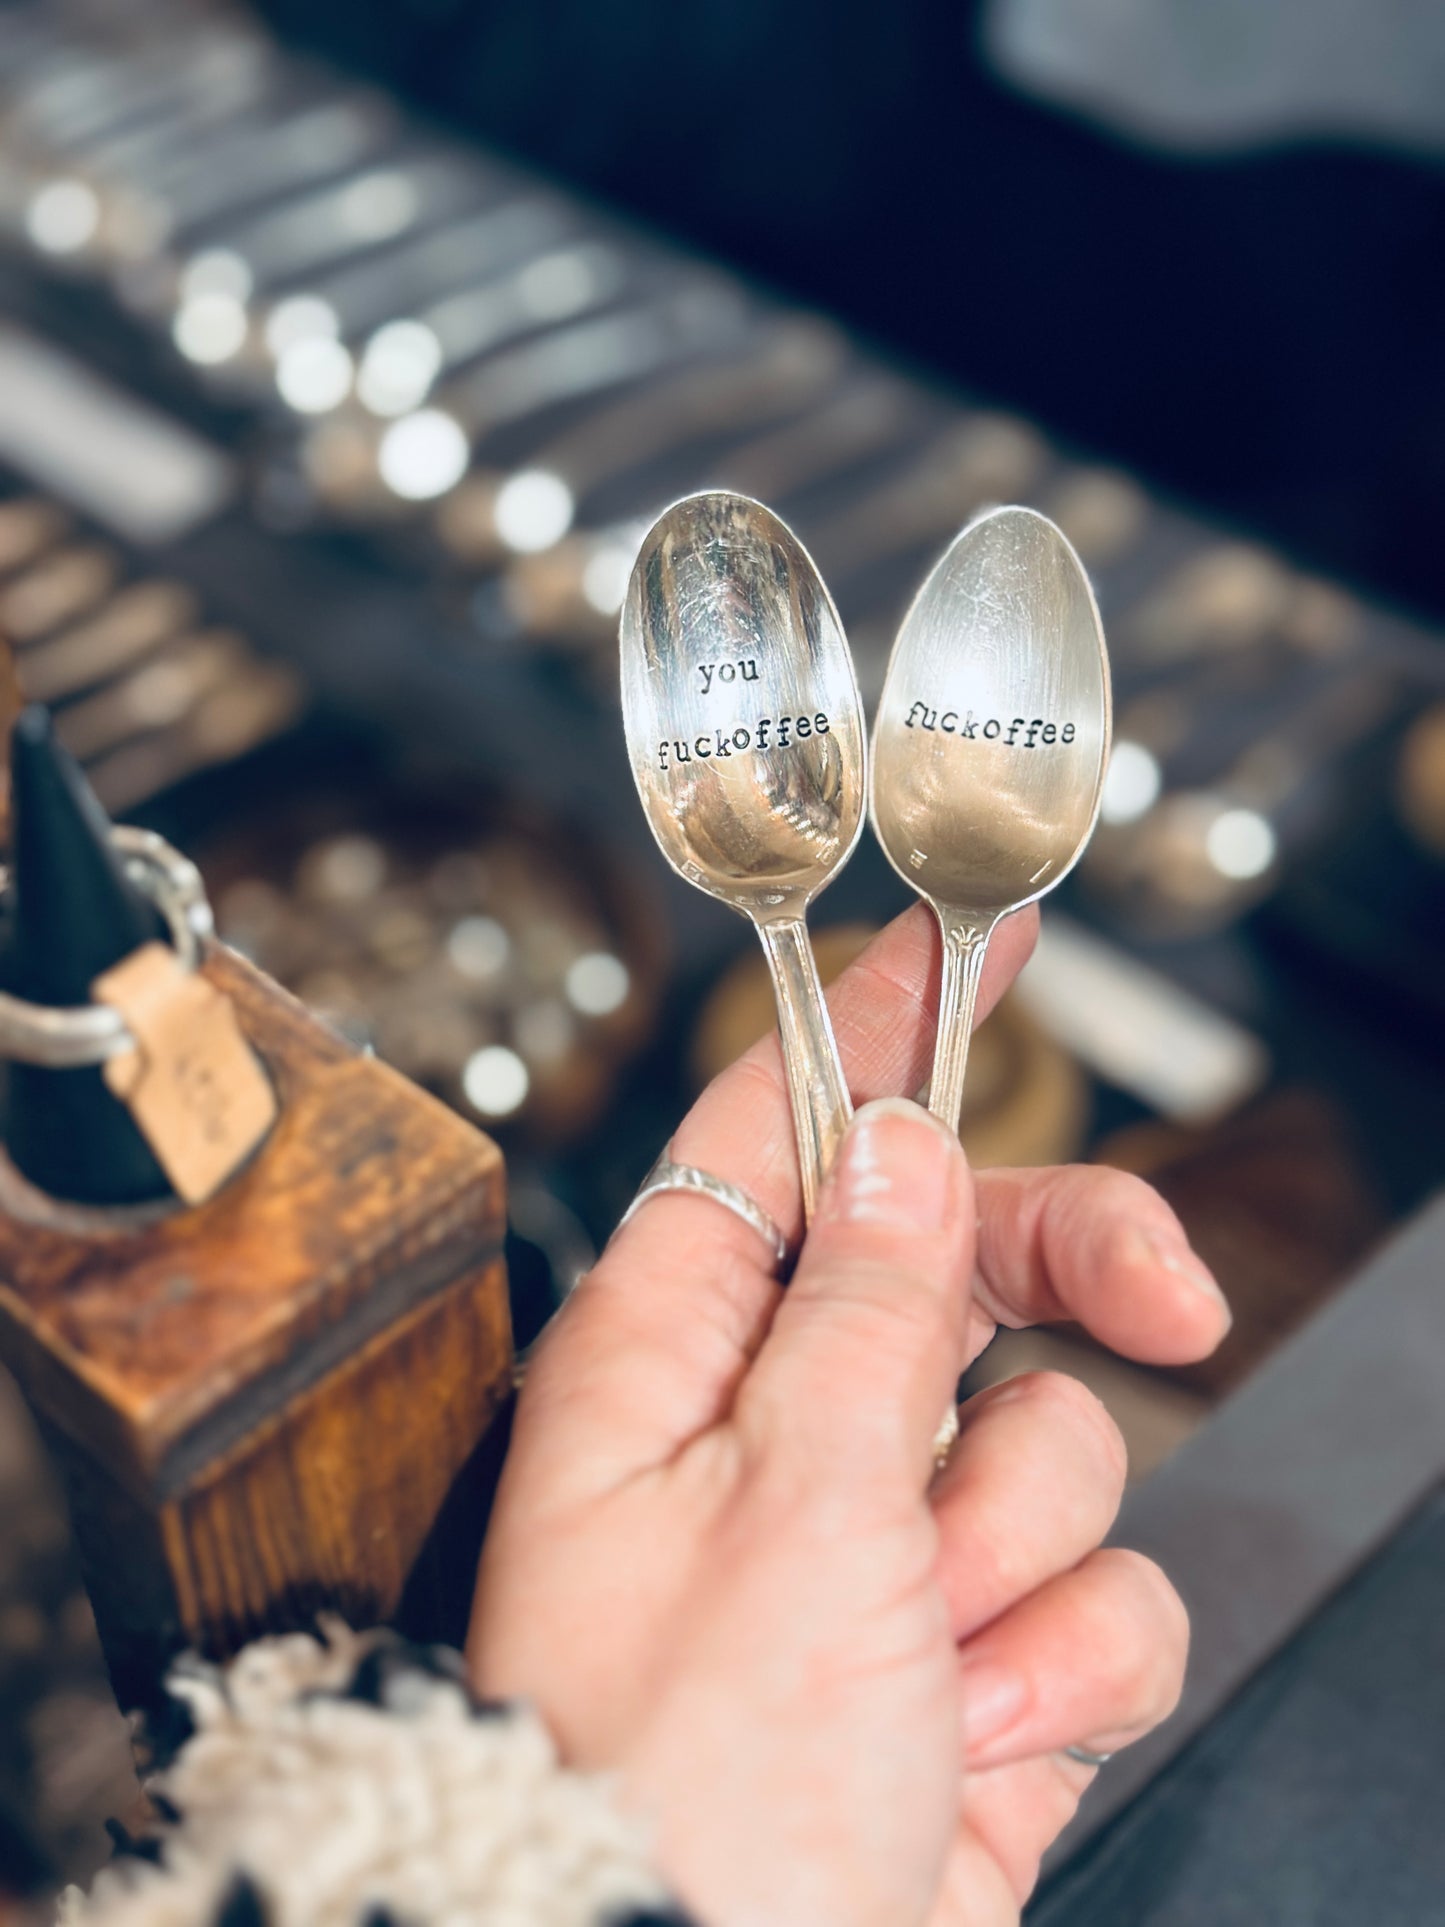 Fuckoffee Vintage Teaspoon | Handcrafted Reclaimed Silverware | Eco-Friendly Gift